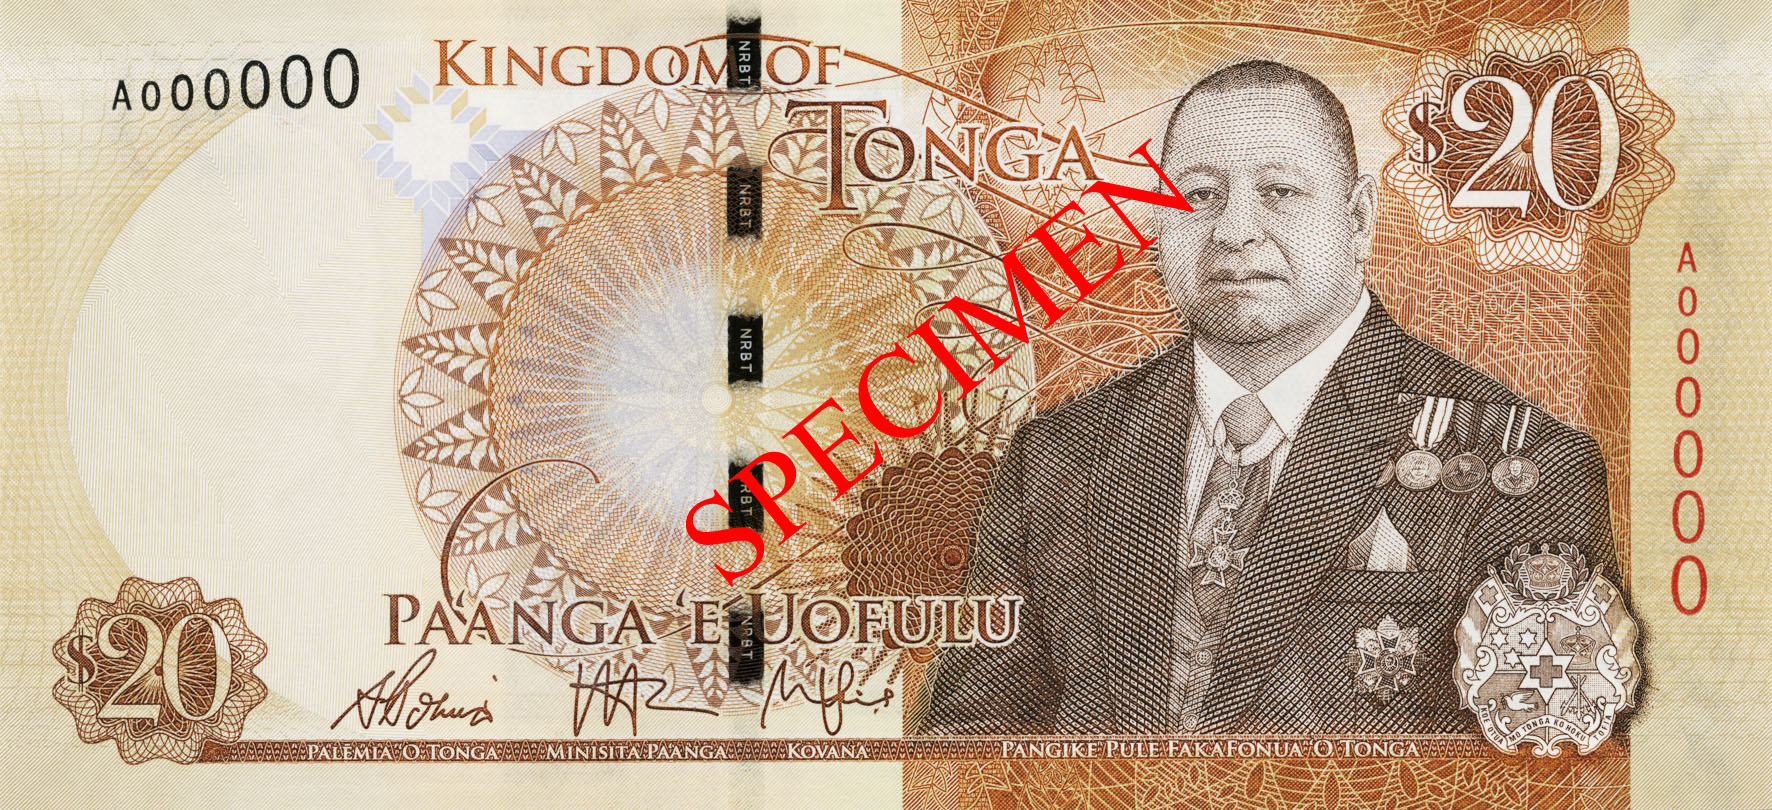 Tonga-20-2015-Specimen-front300dpi